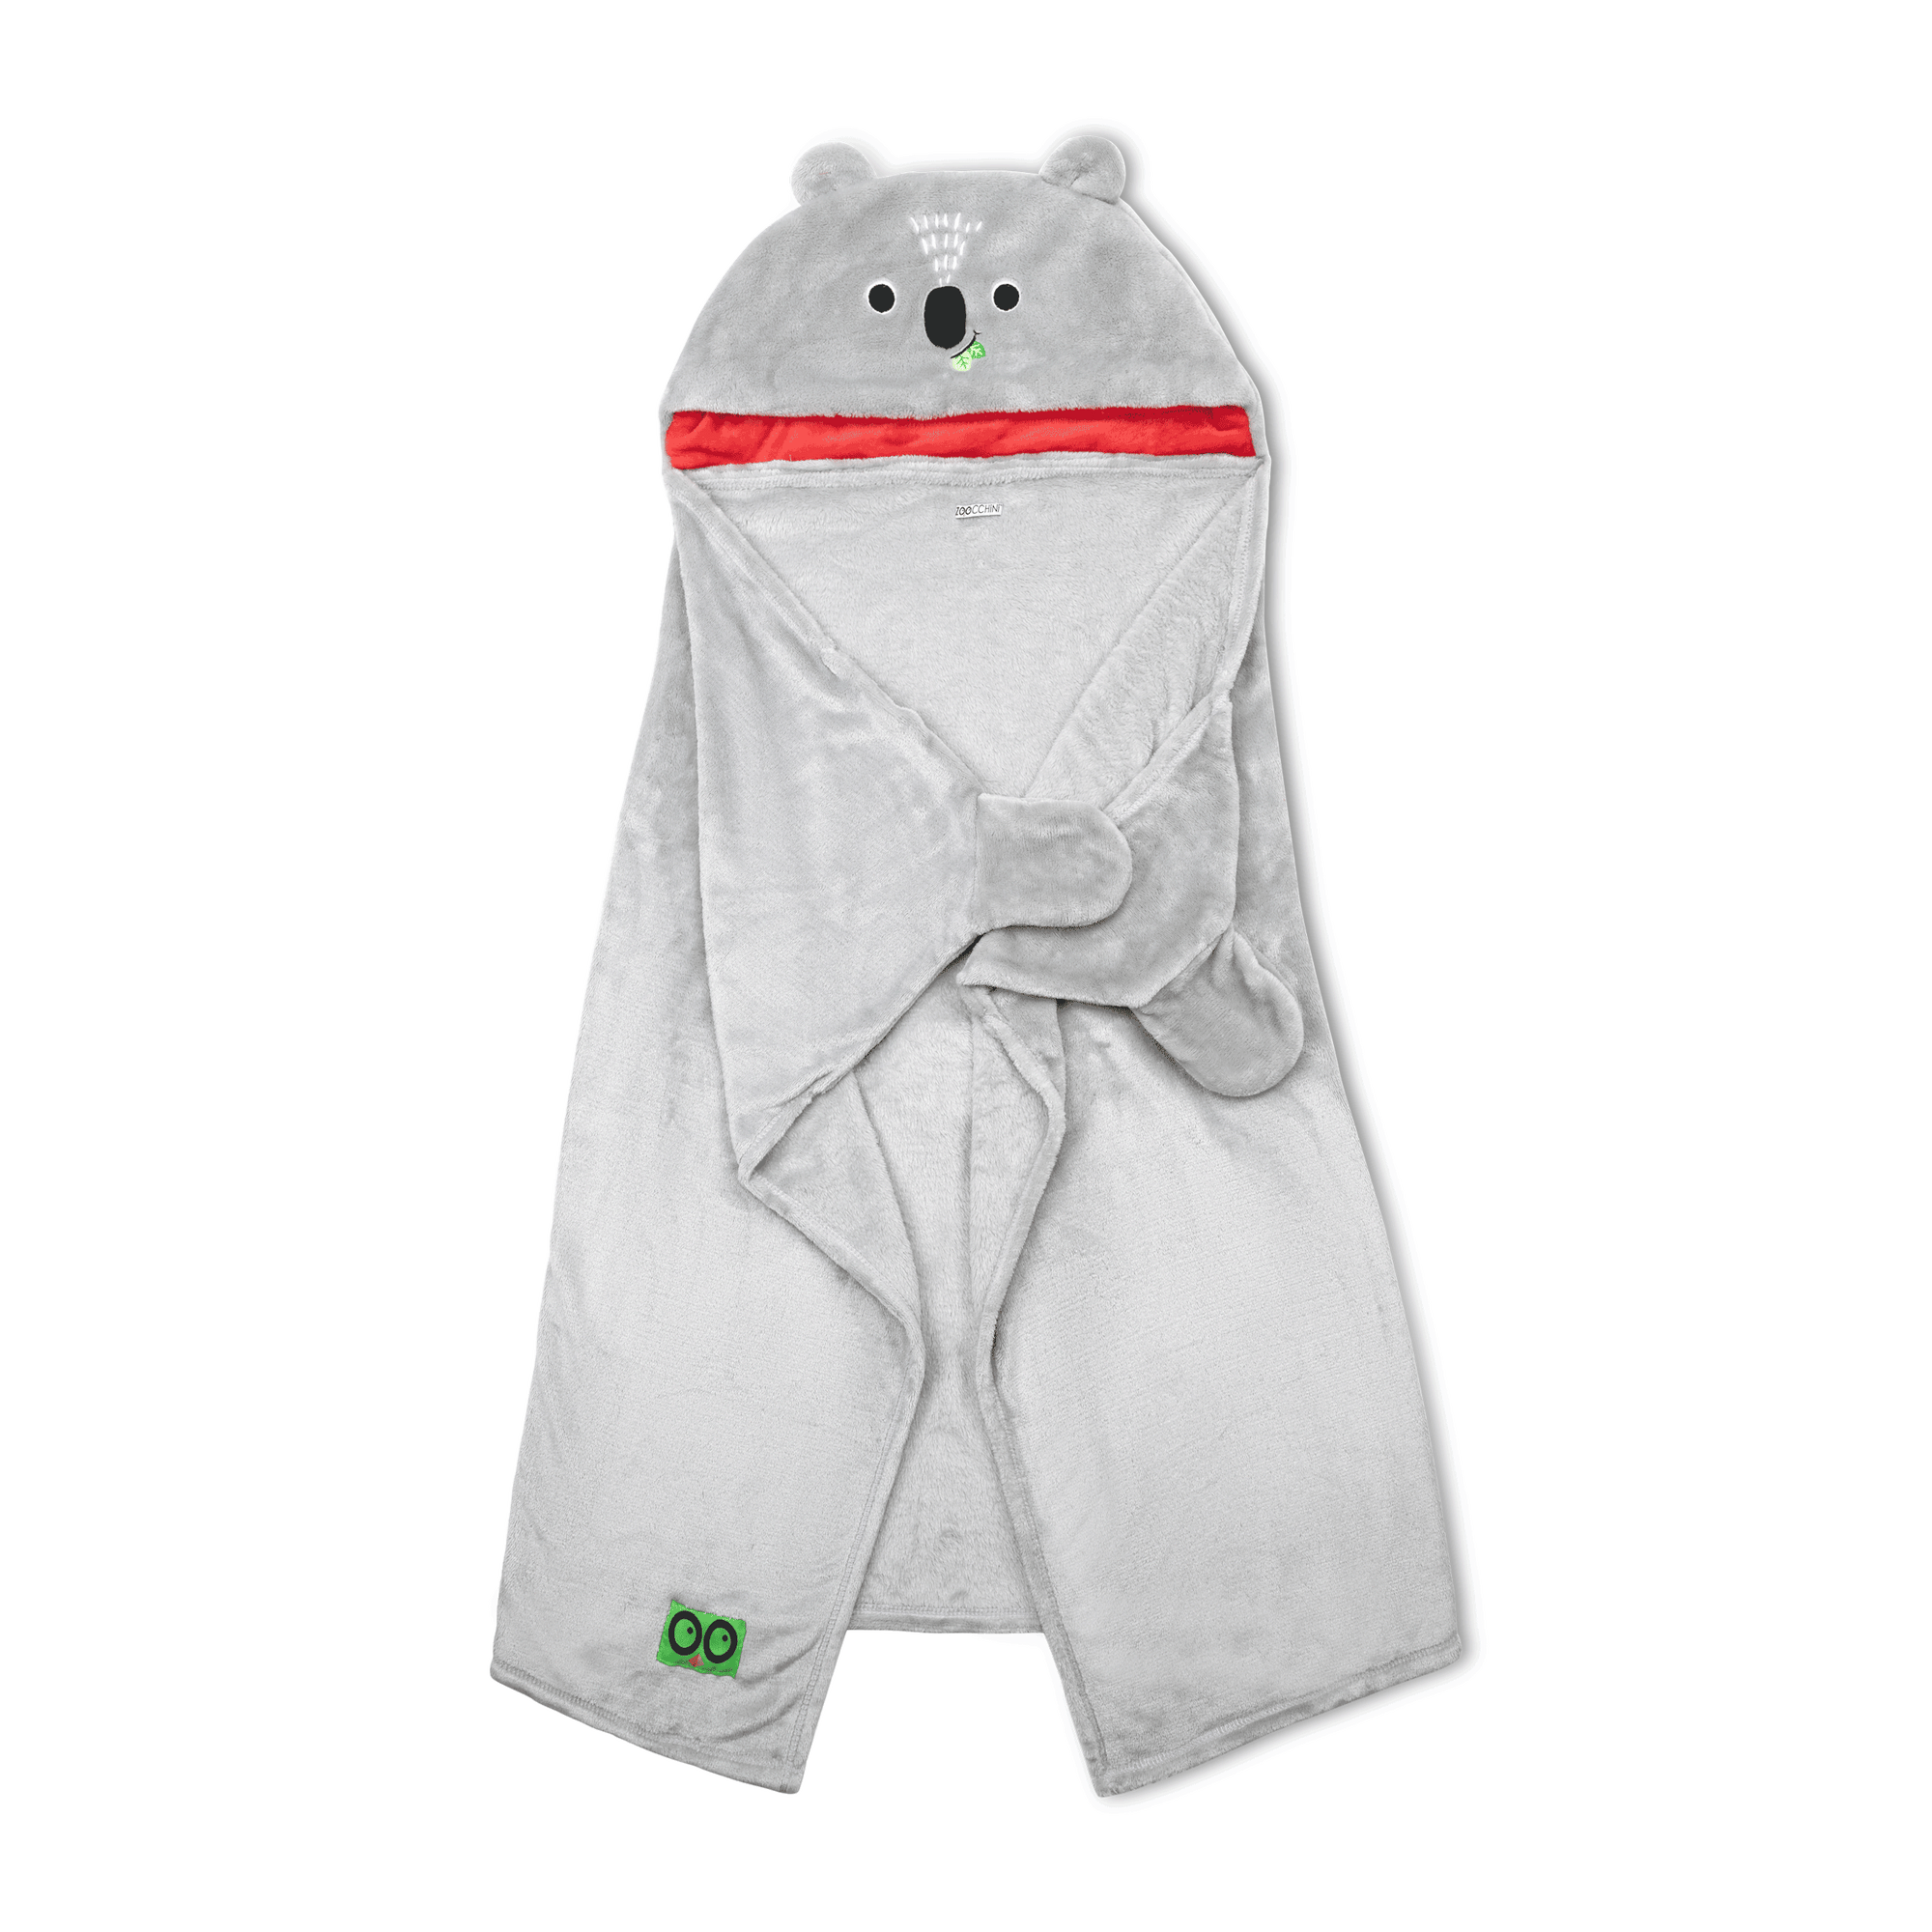 ZOOCCHINI Toddler Kids Animal Hooded Blanket Kai The Koala